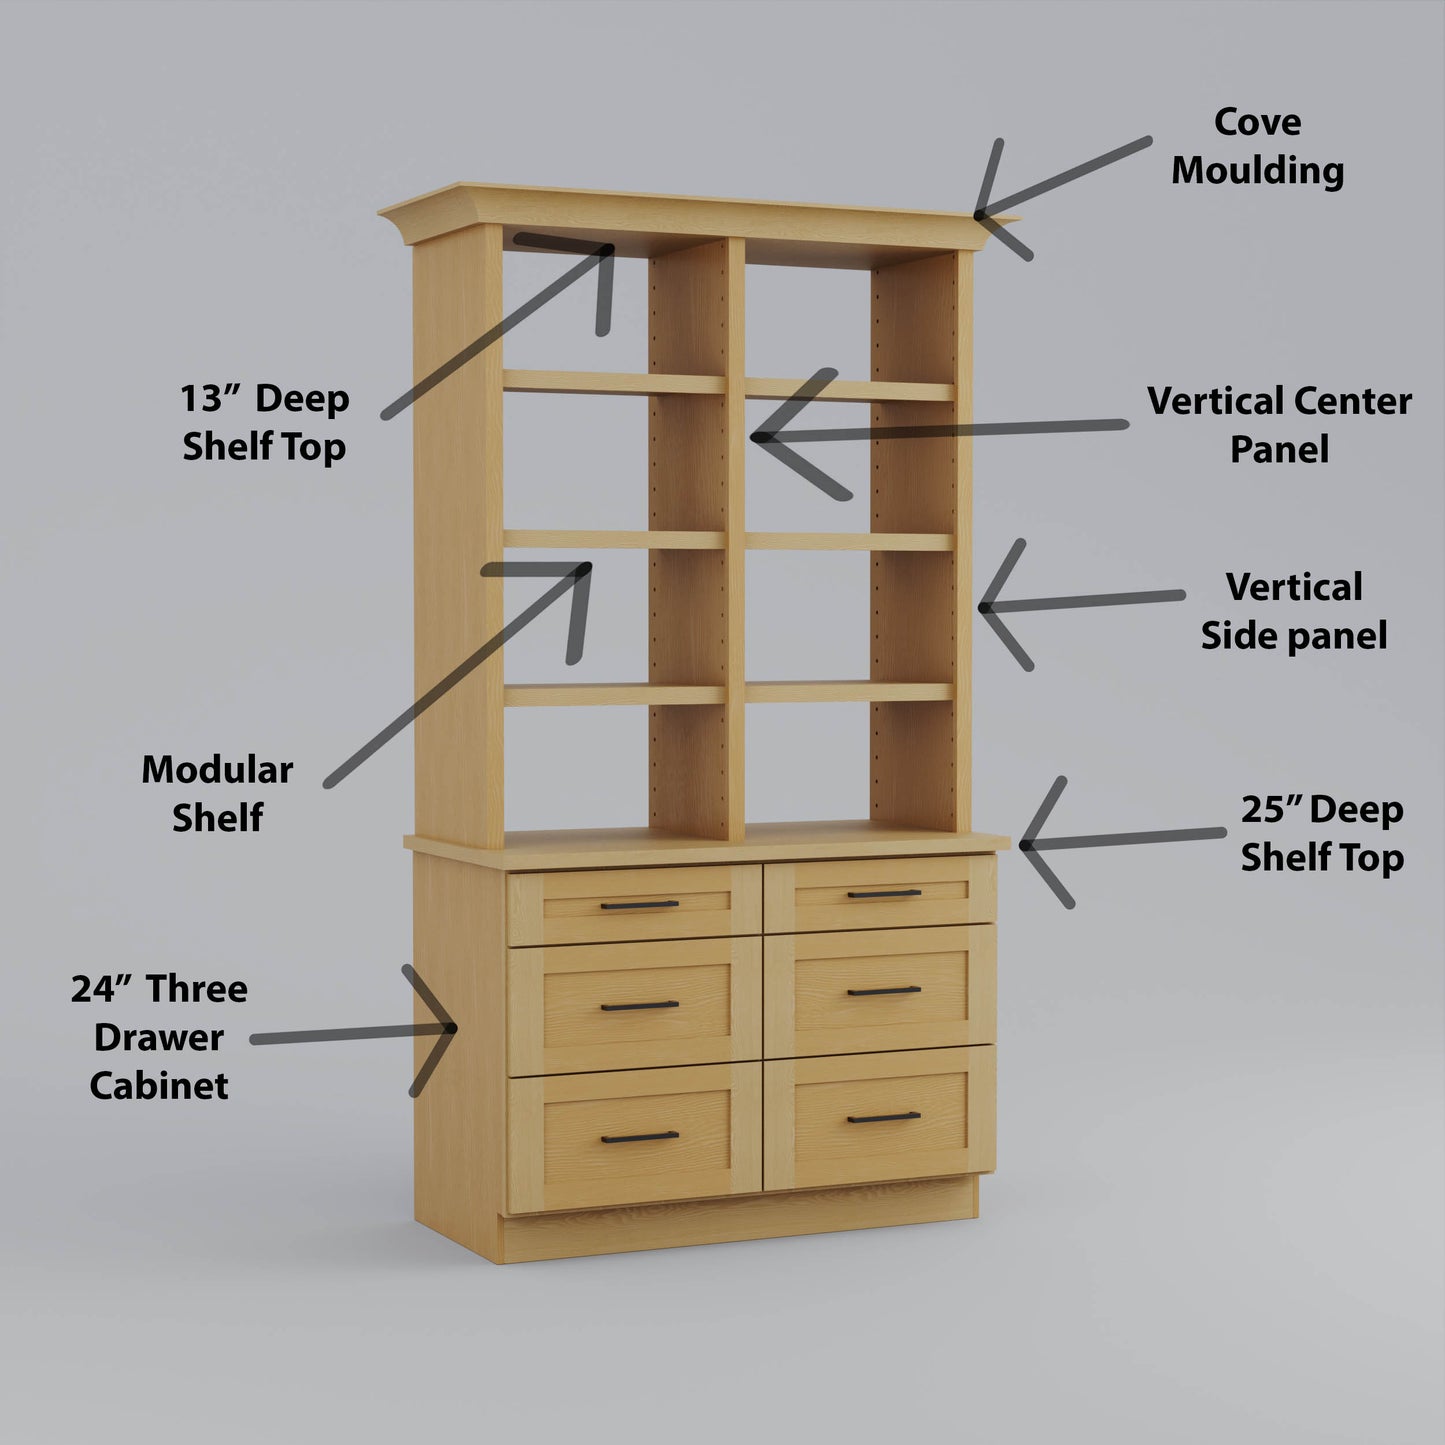 Shelf Top Finished 1.25” plywood Countertop, Shelf or Crown for Lanae Modular Shelving